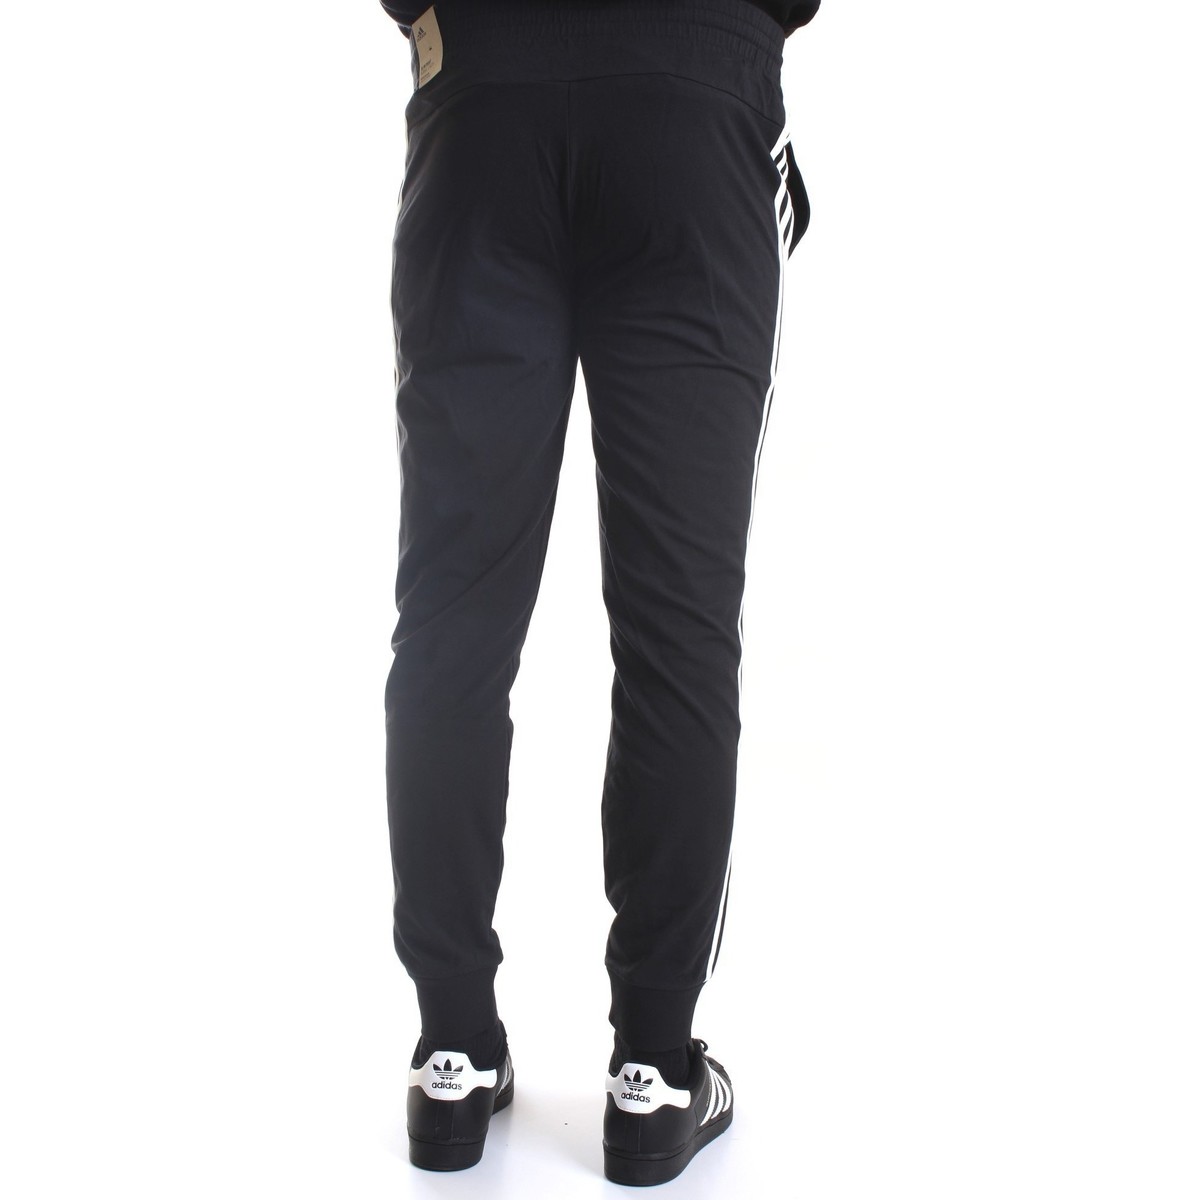 adidas Originals Noir GM5542 Pantalon unisexe noir y1B60wj3